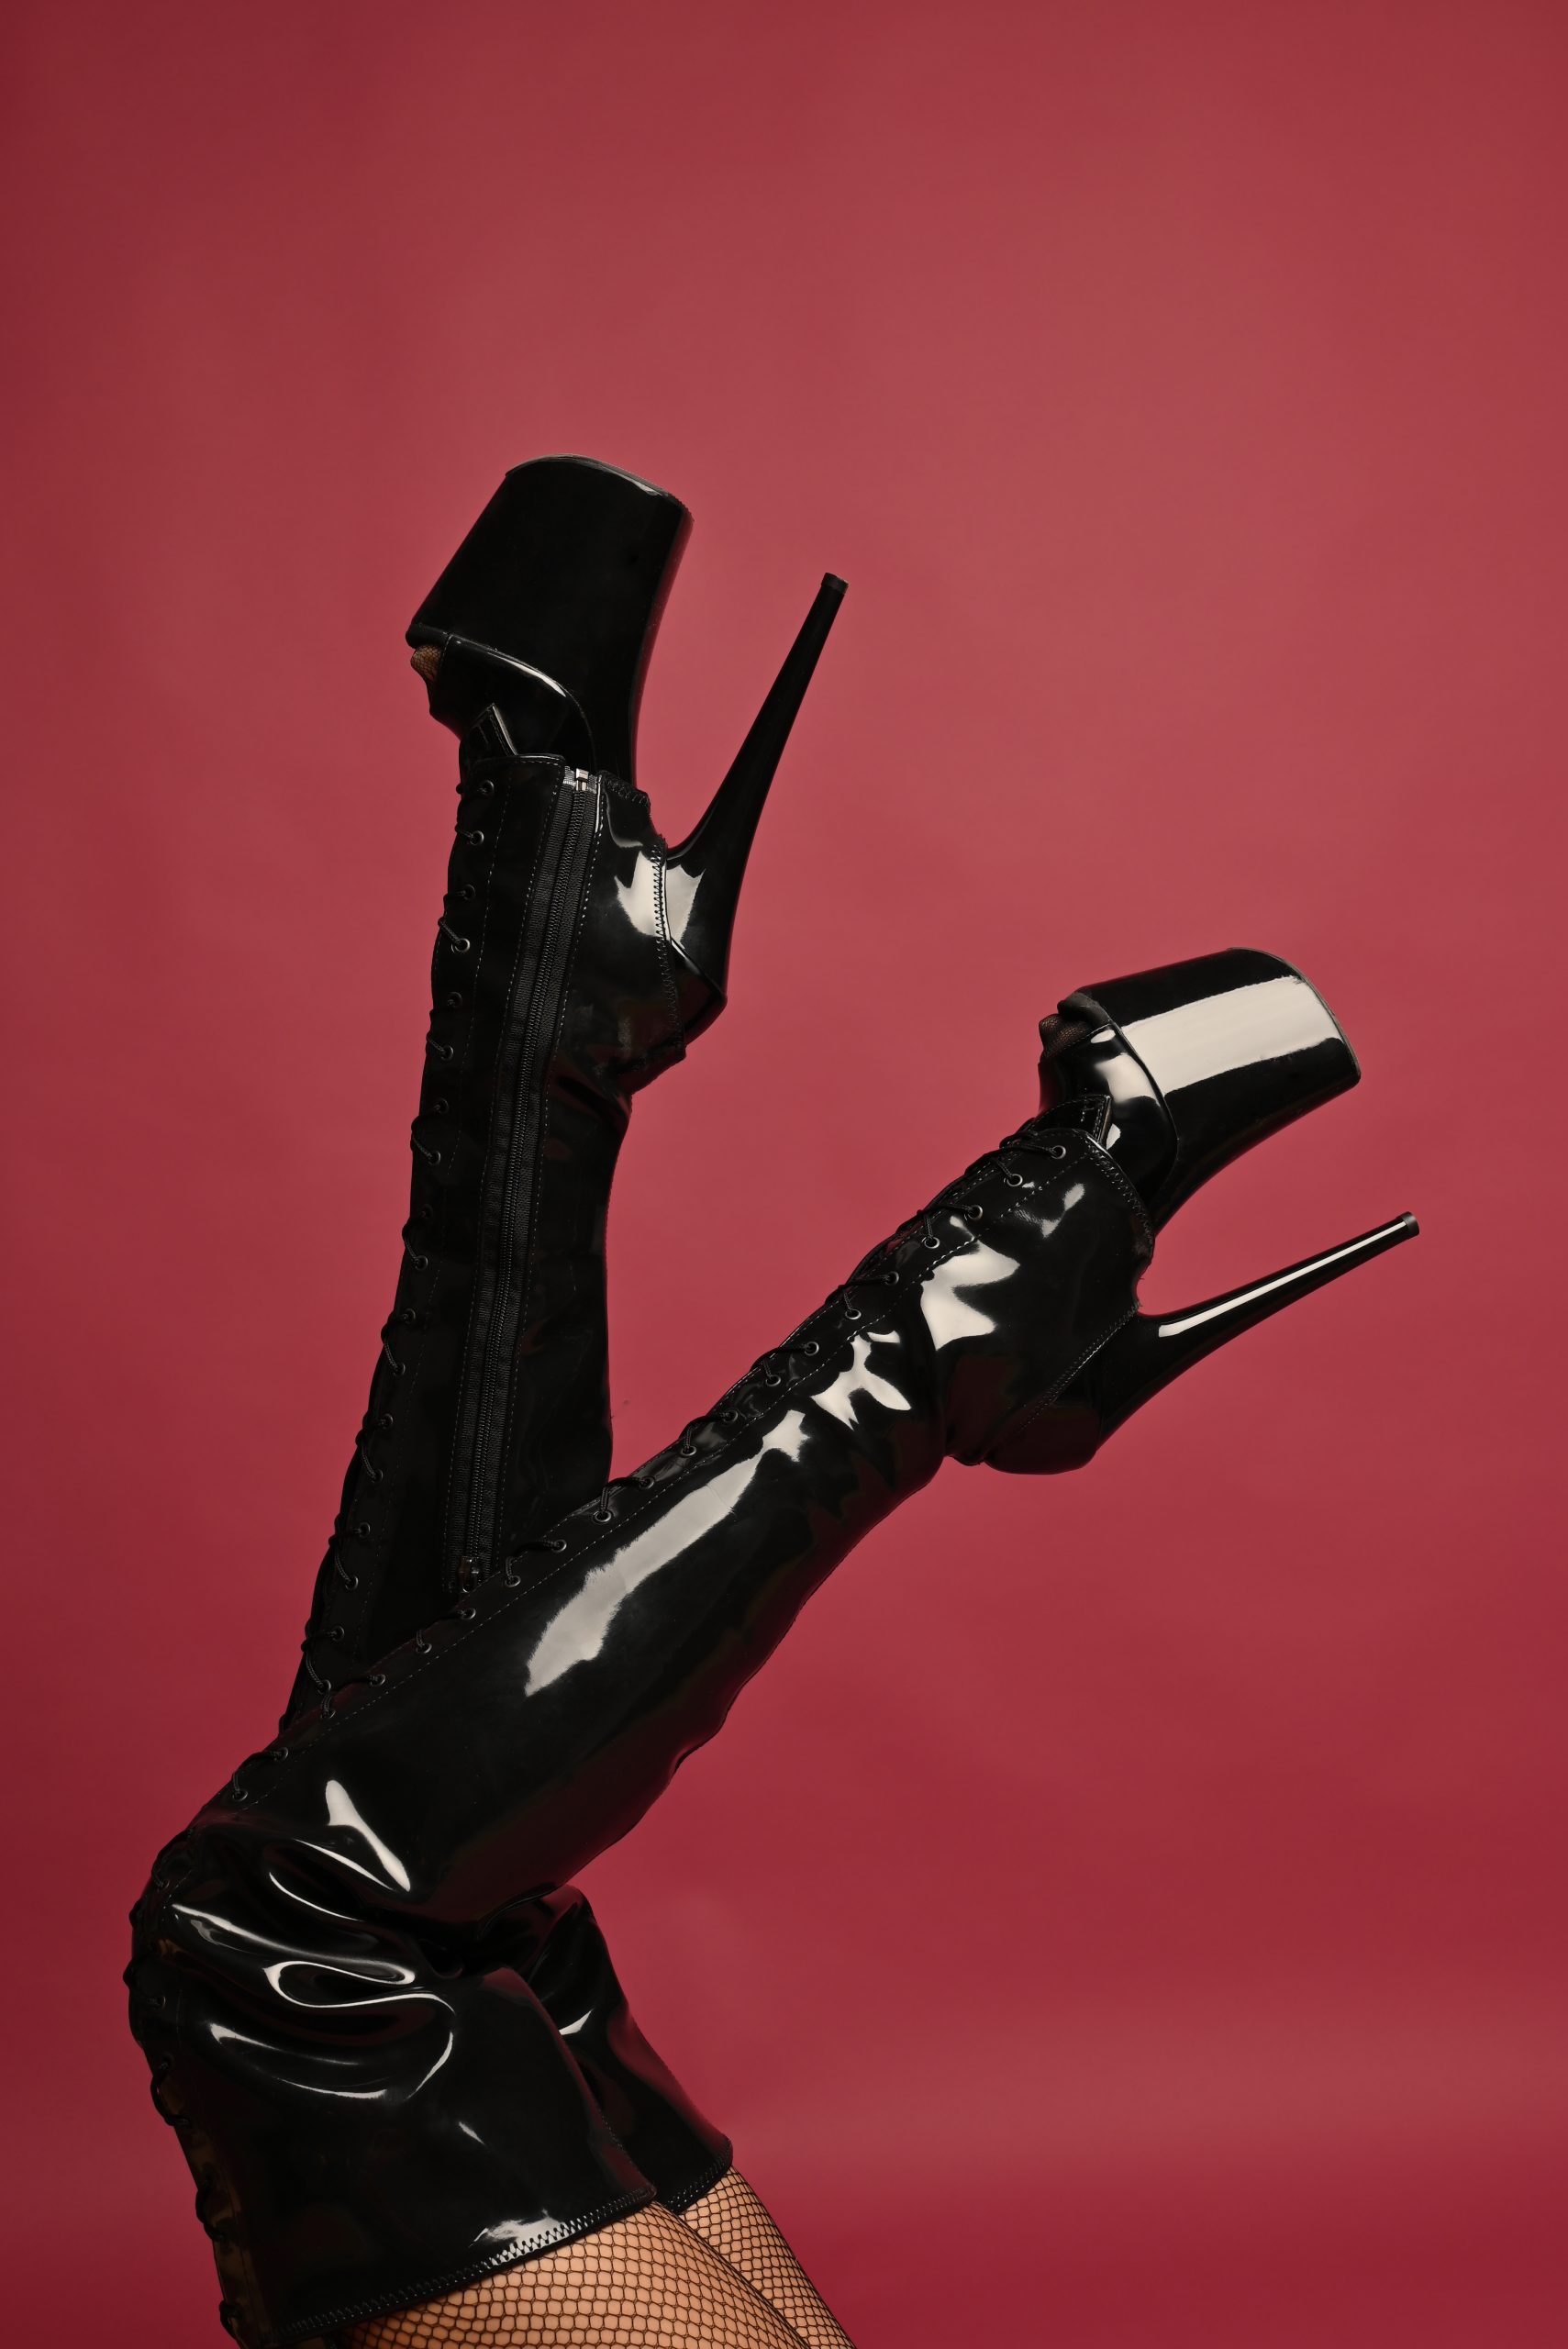 Black shiny patent leather knee stiletto high heels - stock photo open toe platform stiletto boots - via stock.adobe.com